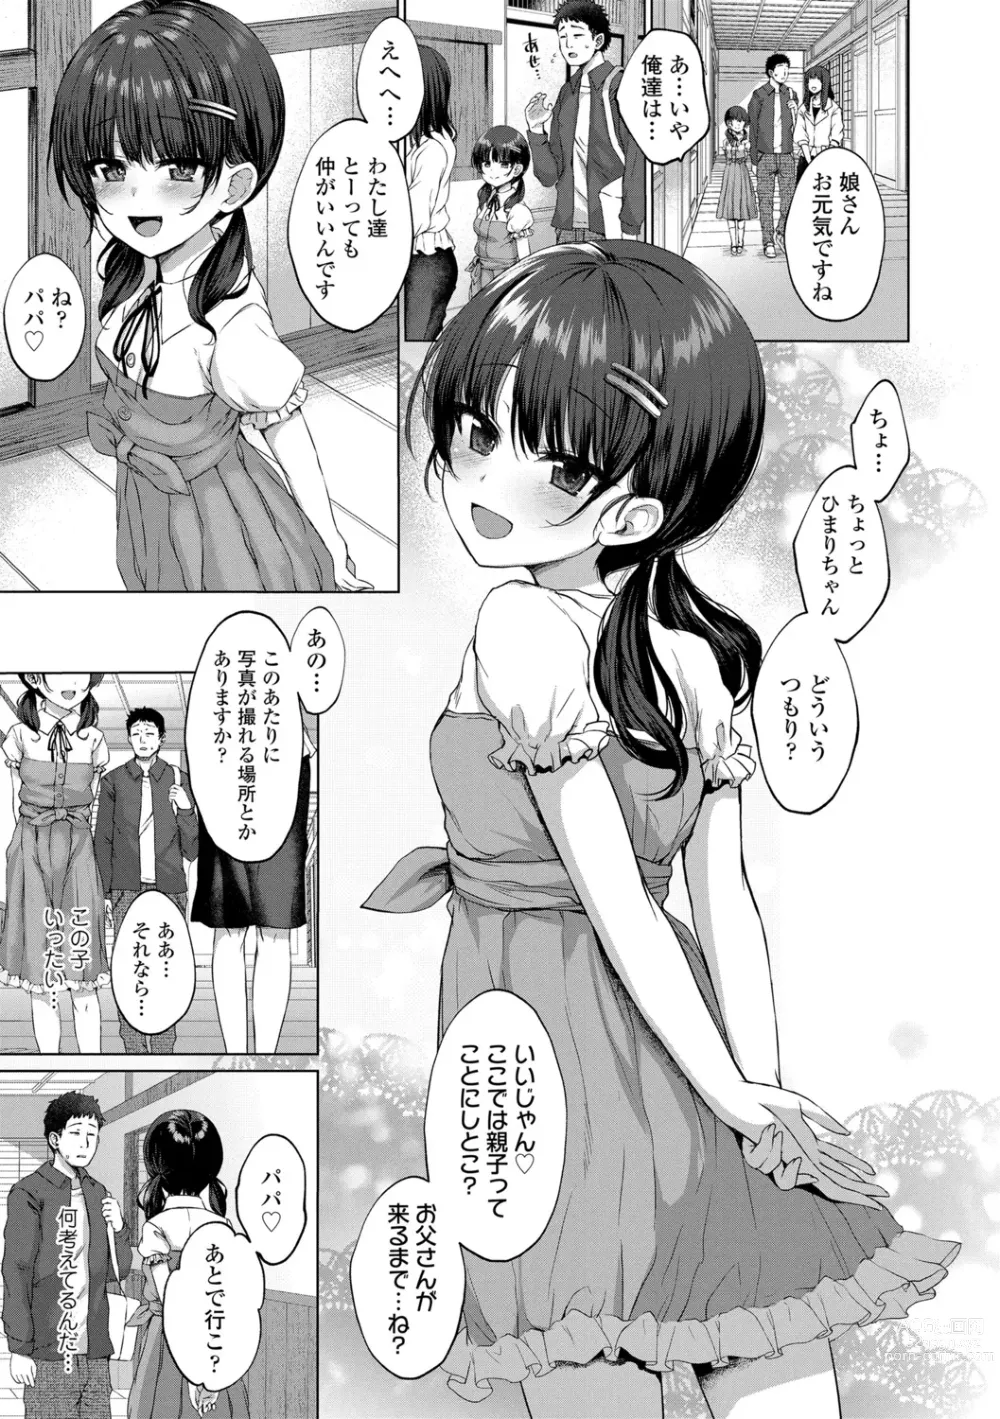 Page 7 of manga Akuma mitai ni kimi wa tatteta